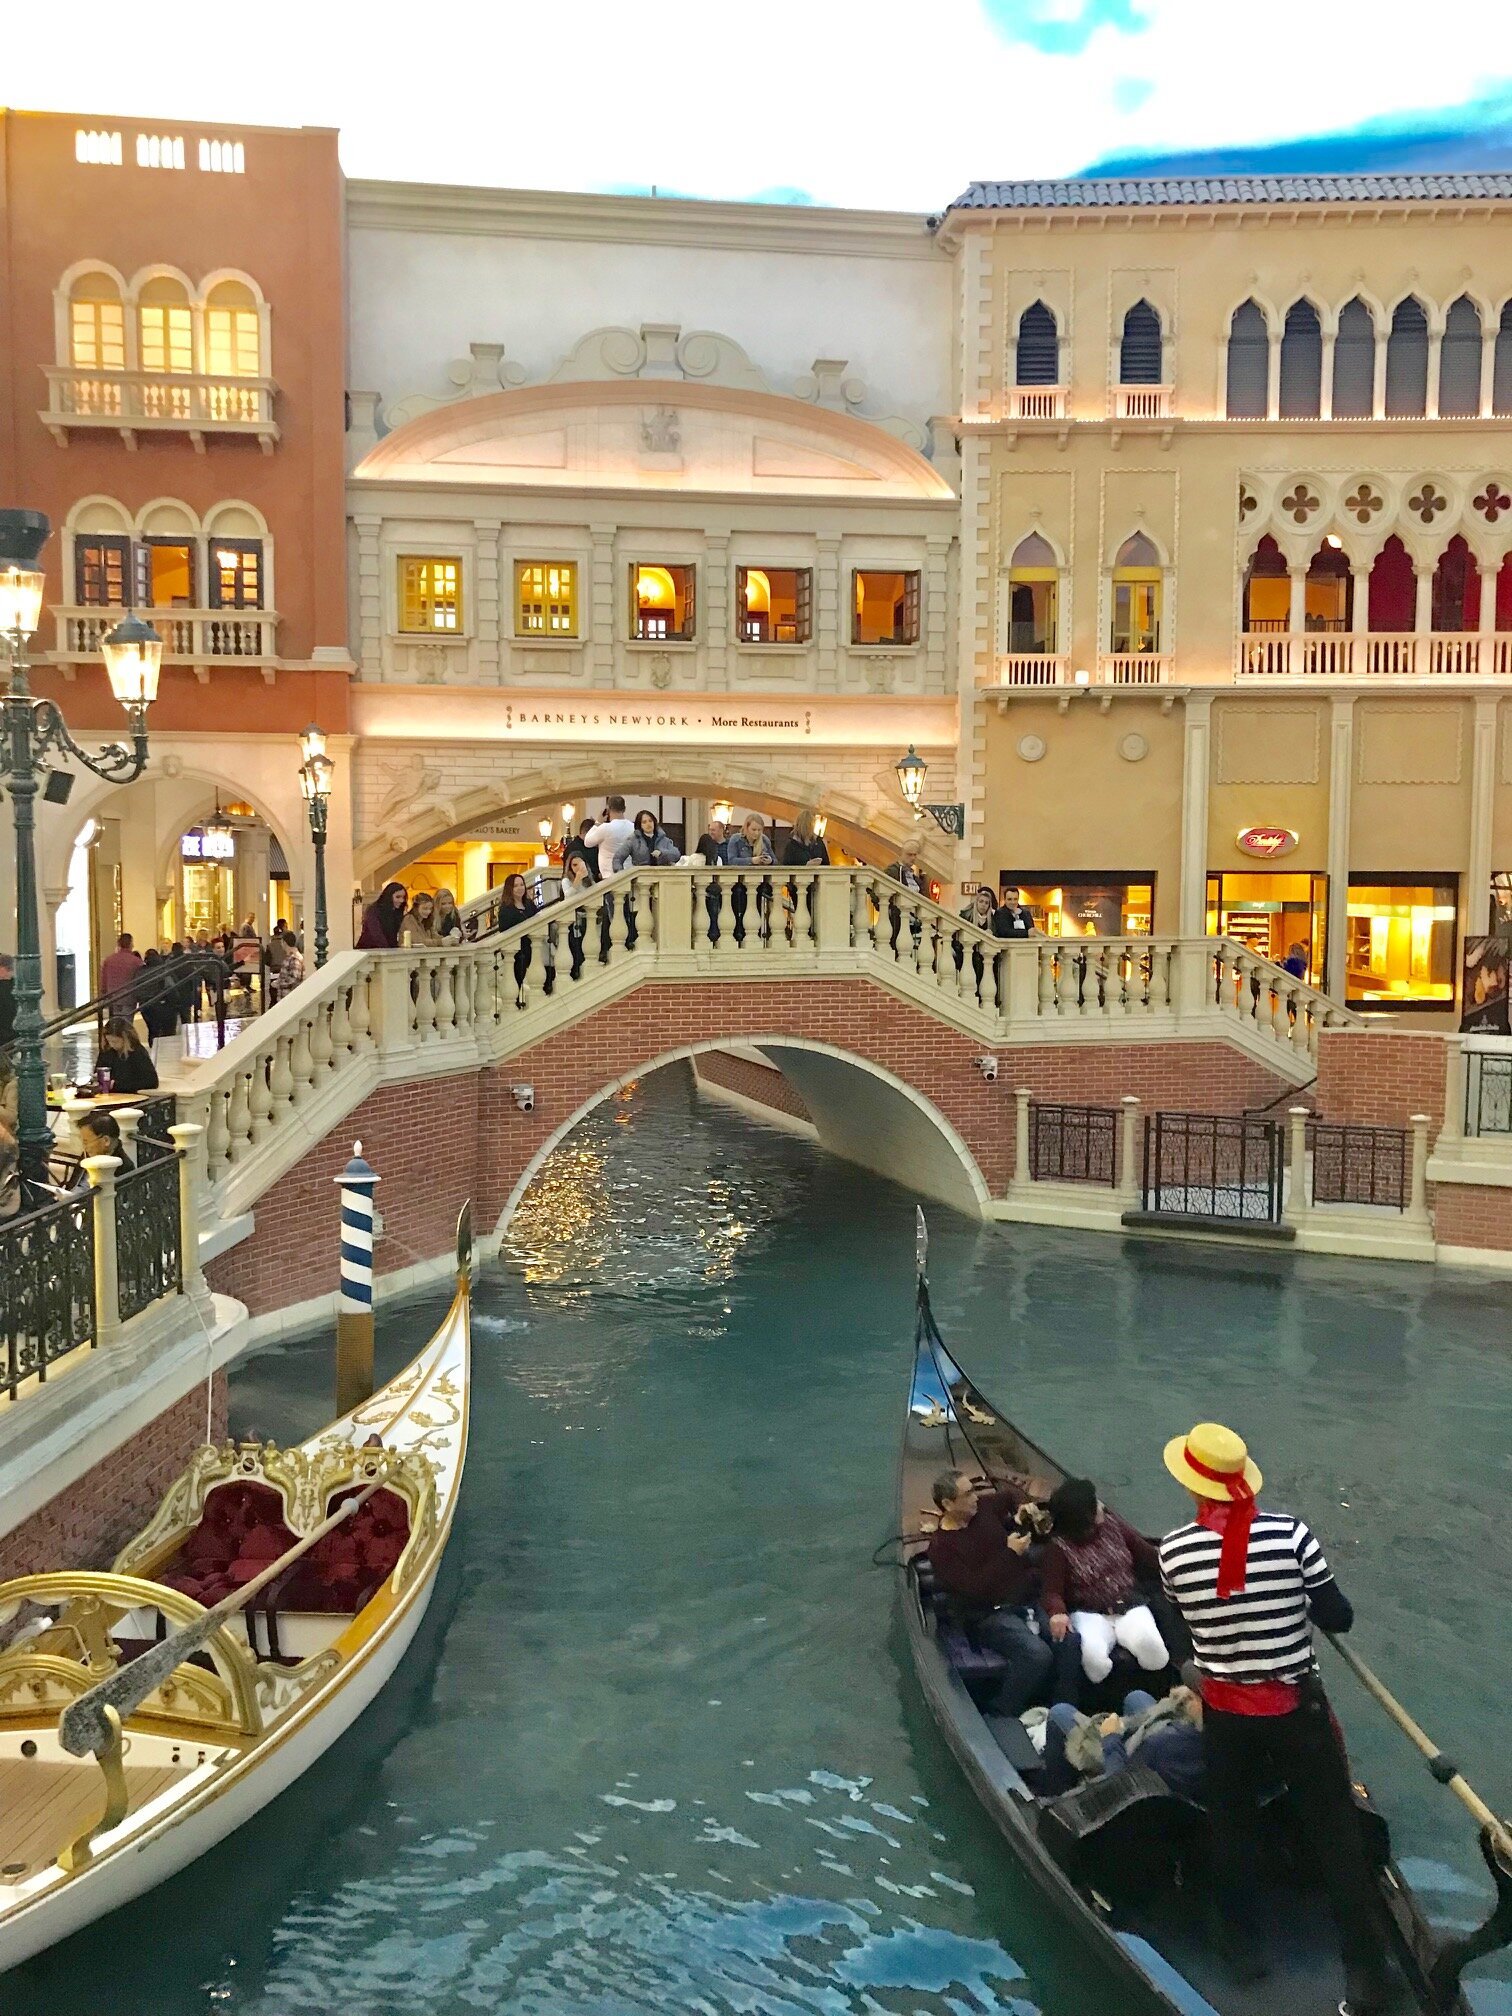 Las Vegas Travel Guide - Top things to do when in Las Vegas - Venetian Gondolas at the Venetian